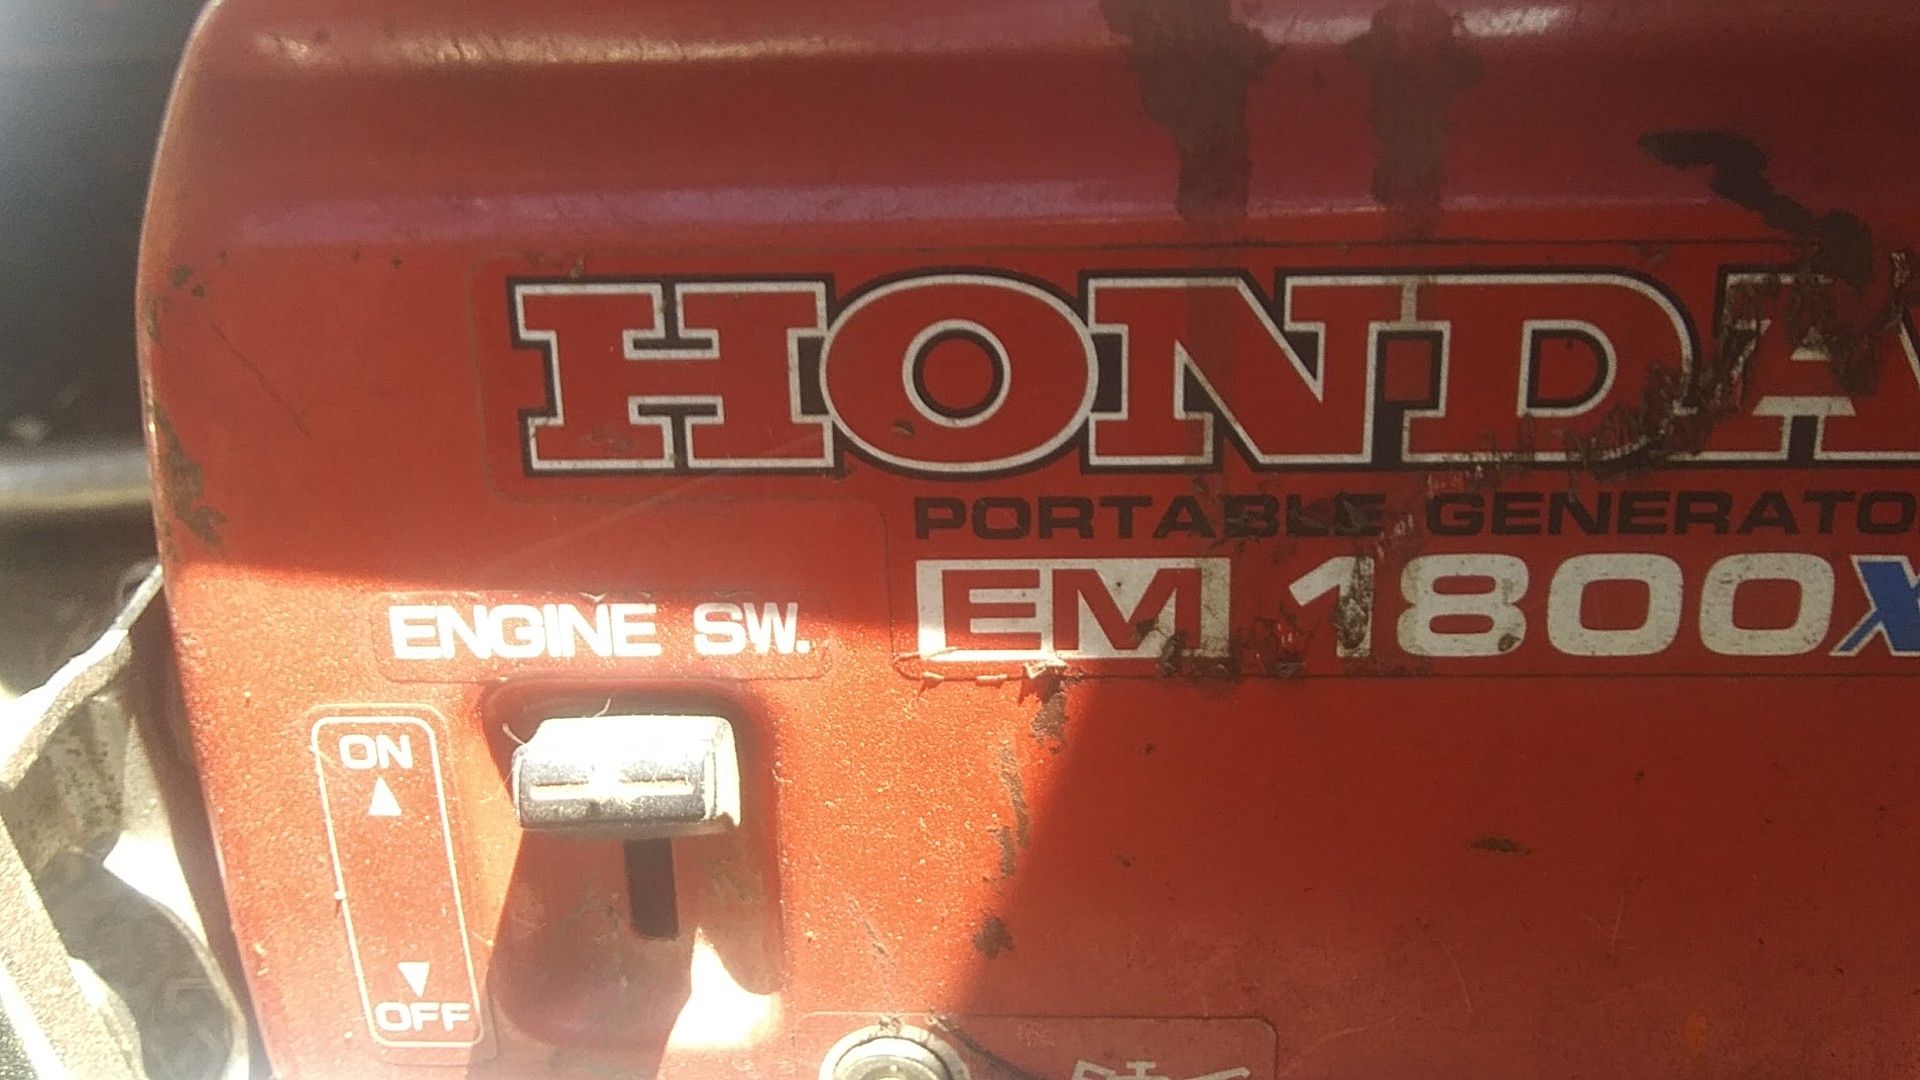 Honda em1800x generator (needs adjustment) works